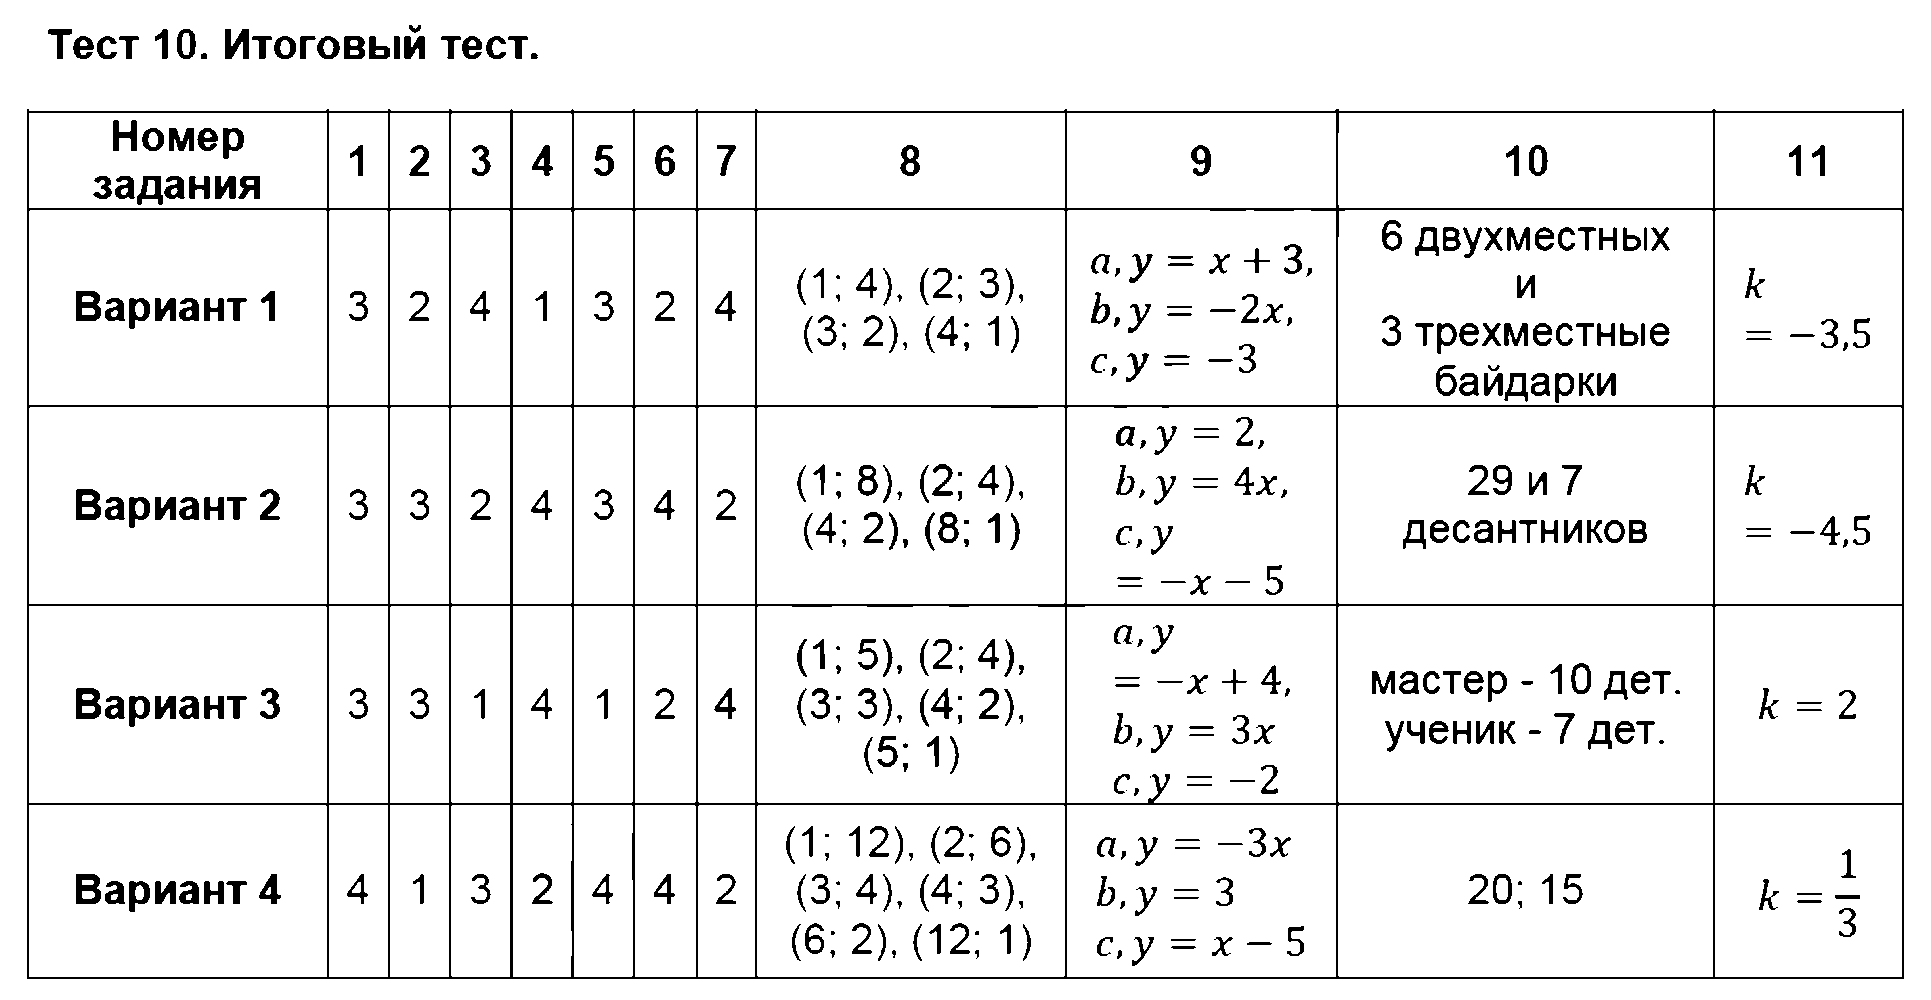 ГДЗ Алгебра 7 класс - Тест 10. Итоговый тест